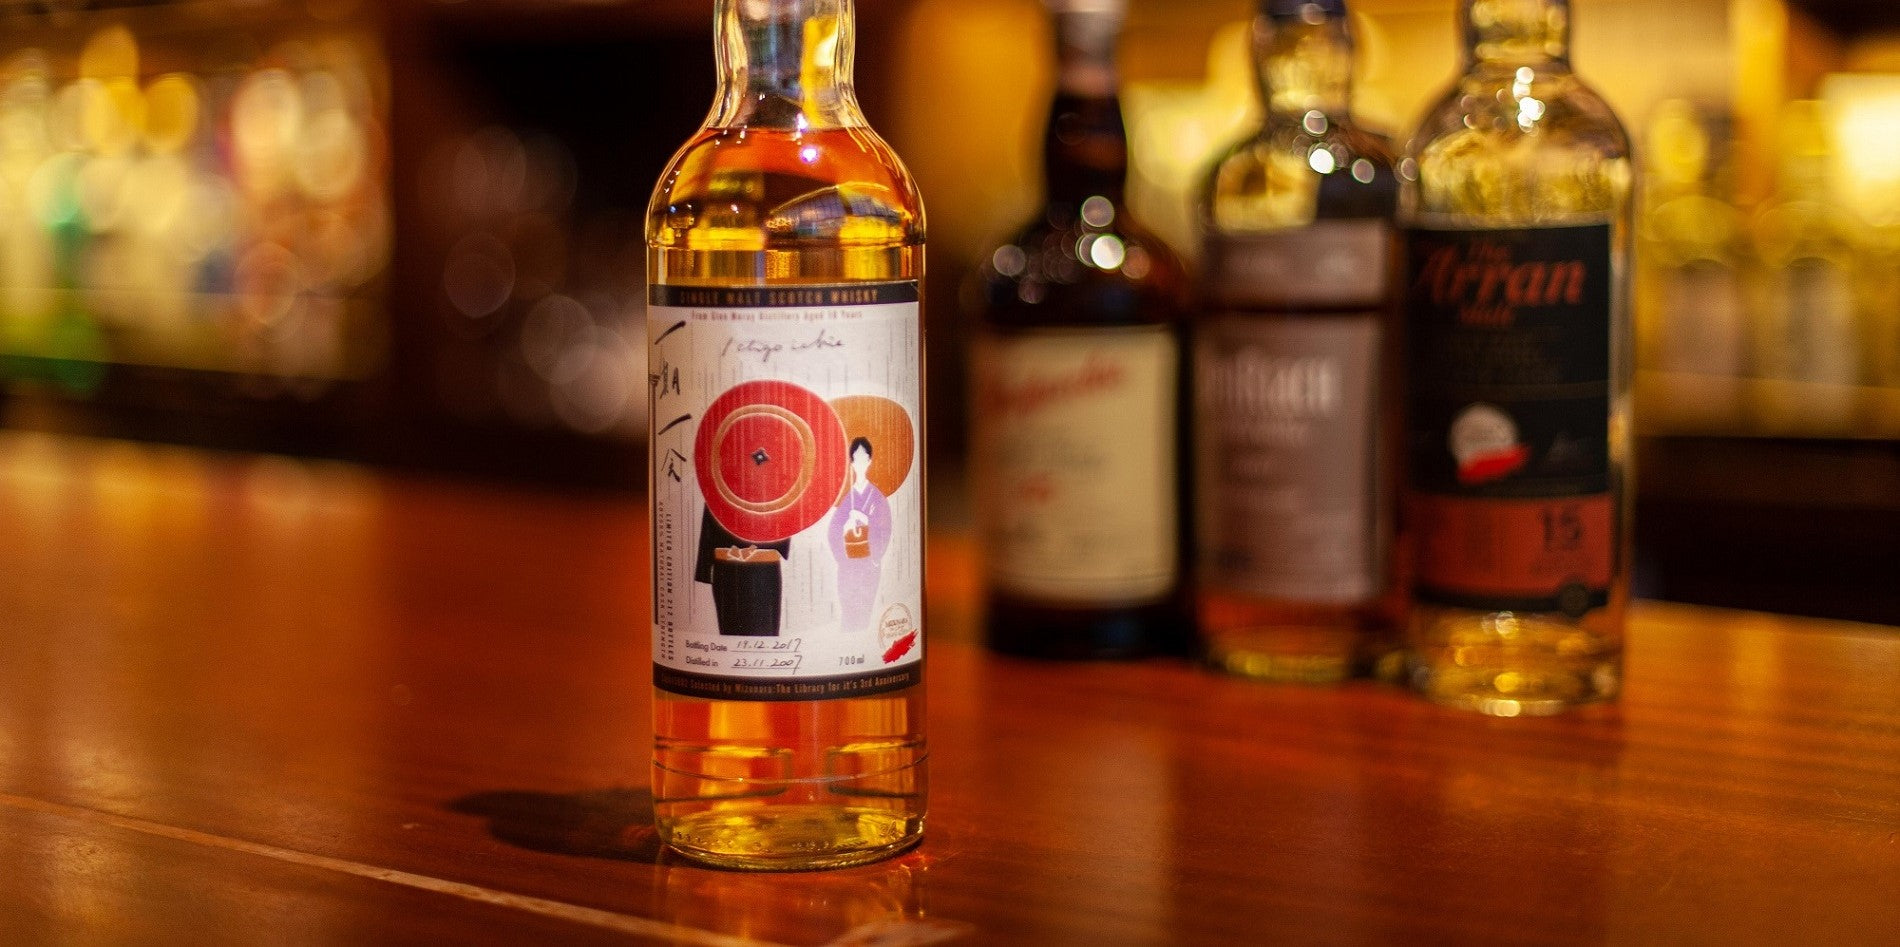 An Independent bottling of Glen Moray Whisky by Mizunara Hong Kong